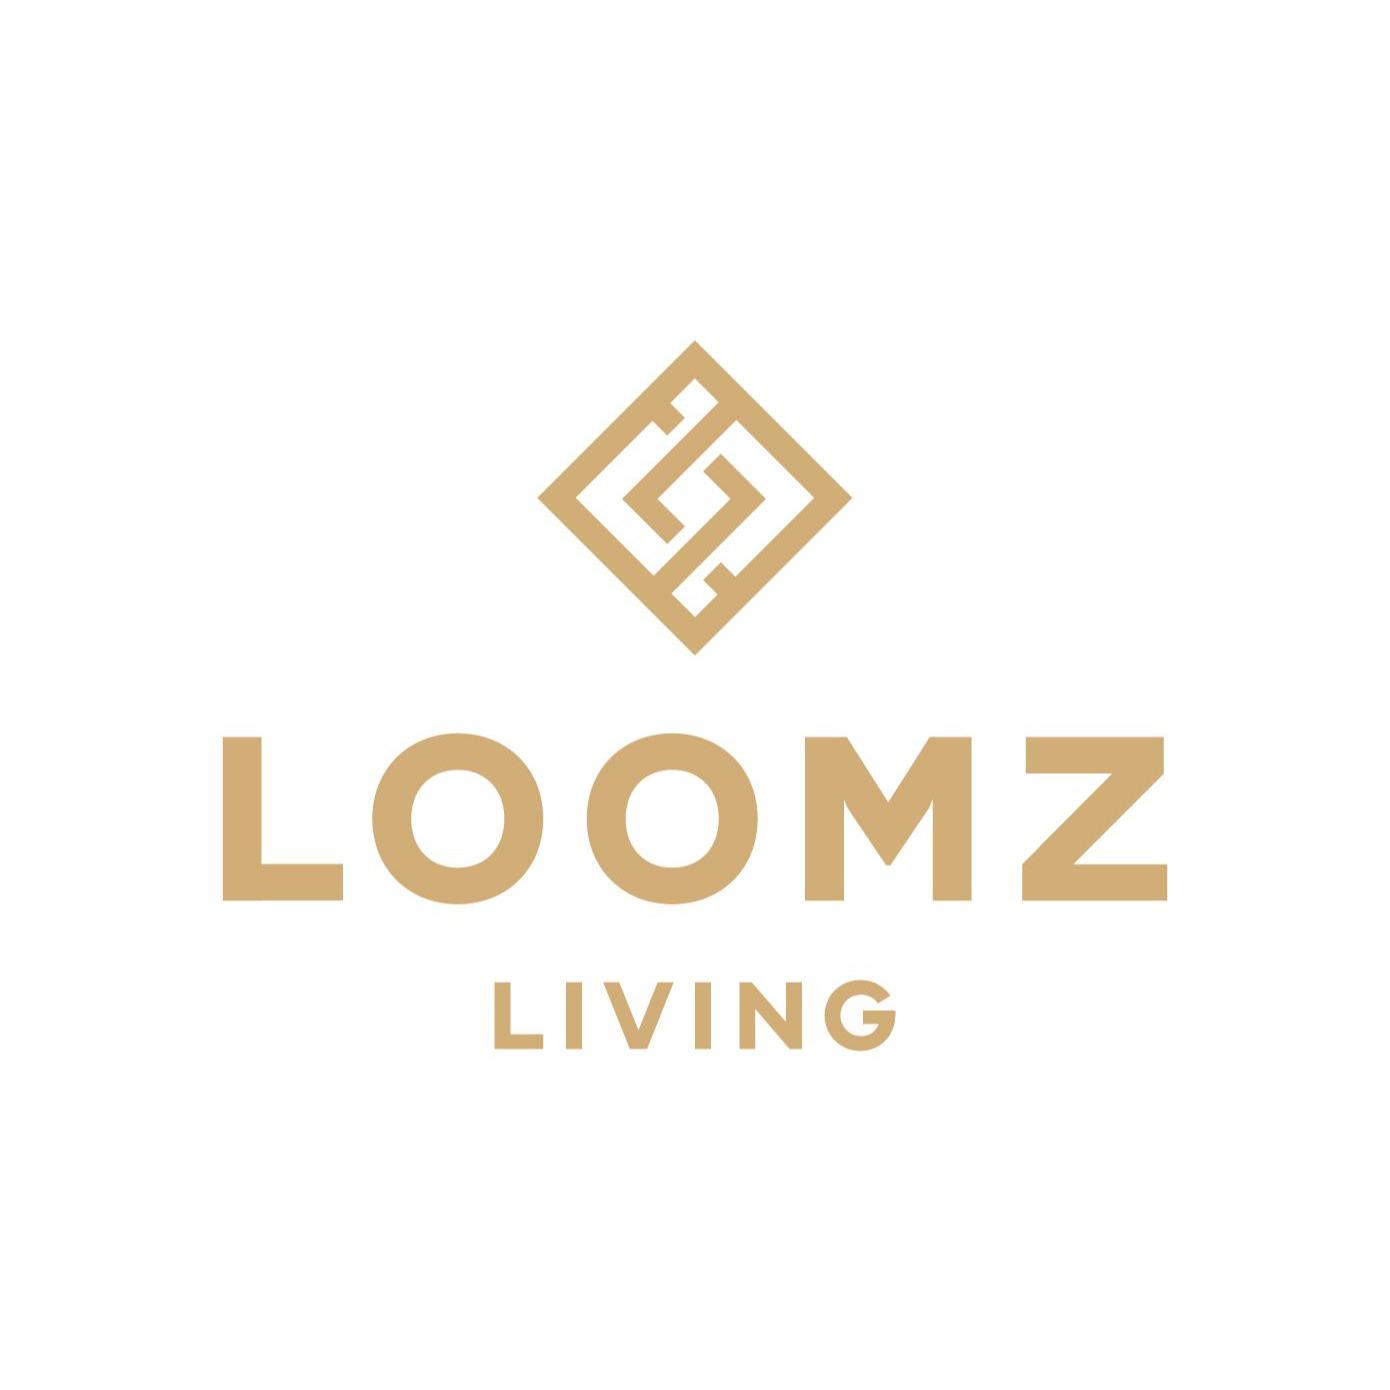 Loomz living - Aparthotel Innsbruck - Apartment Building - Innsbruck - 0676 5071605 Austria | ShowMeLocal.com